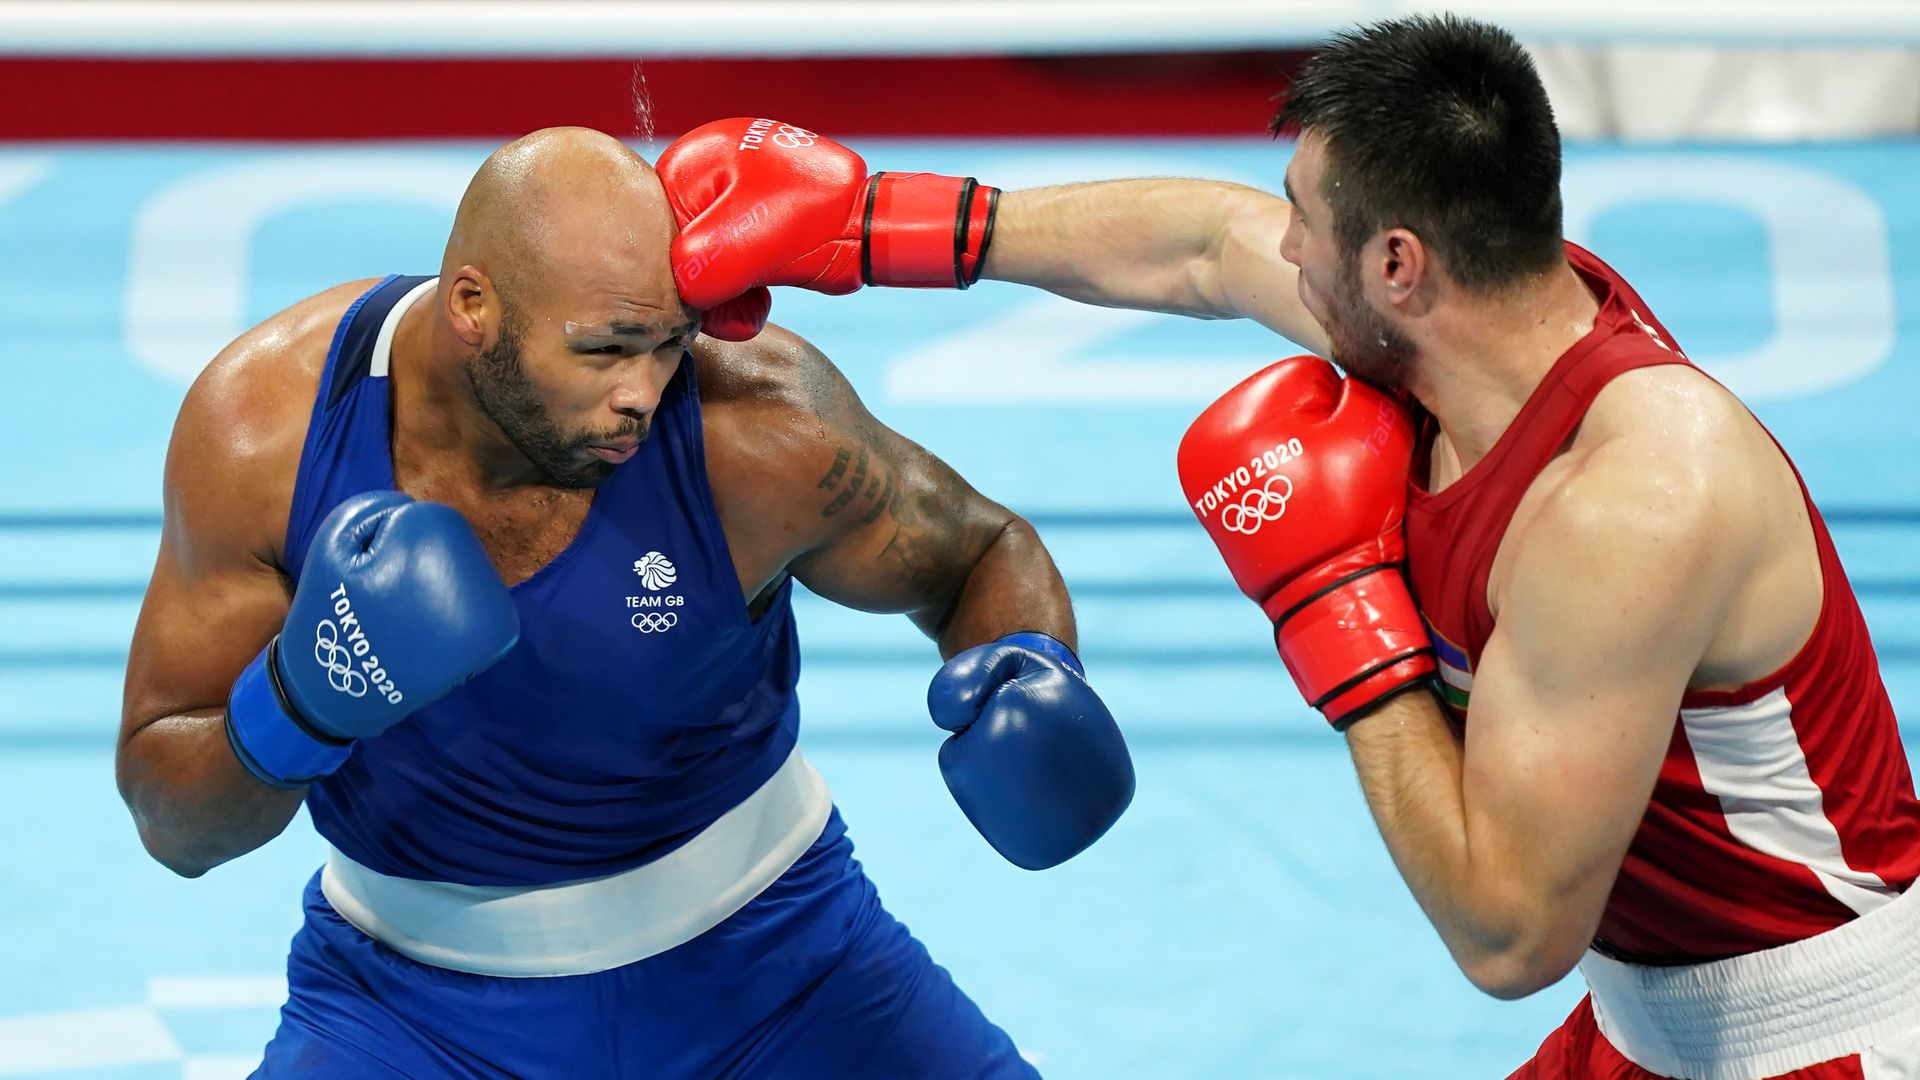 Clarke beaten but wins bronze; GB boxers set medal record